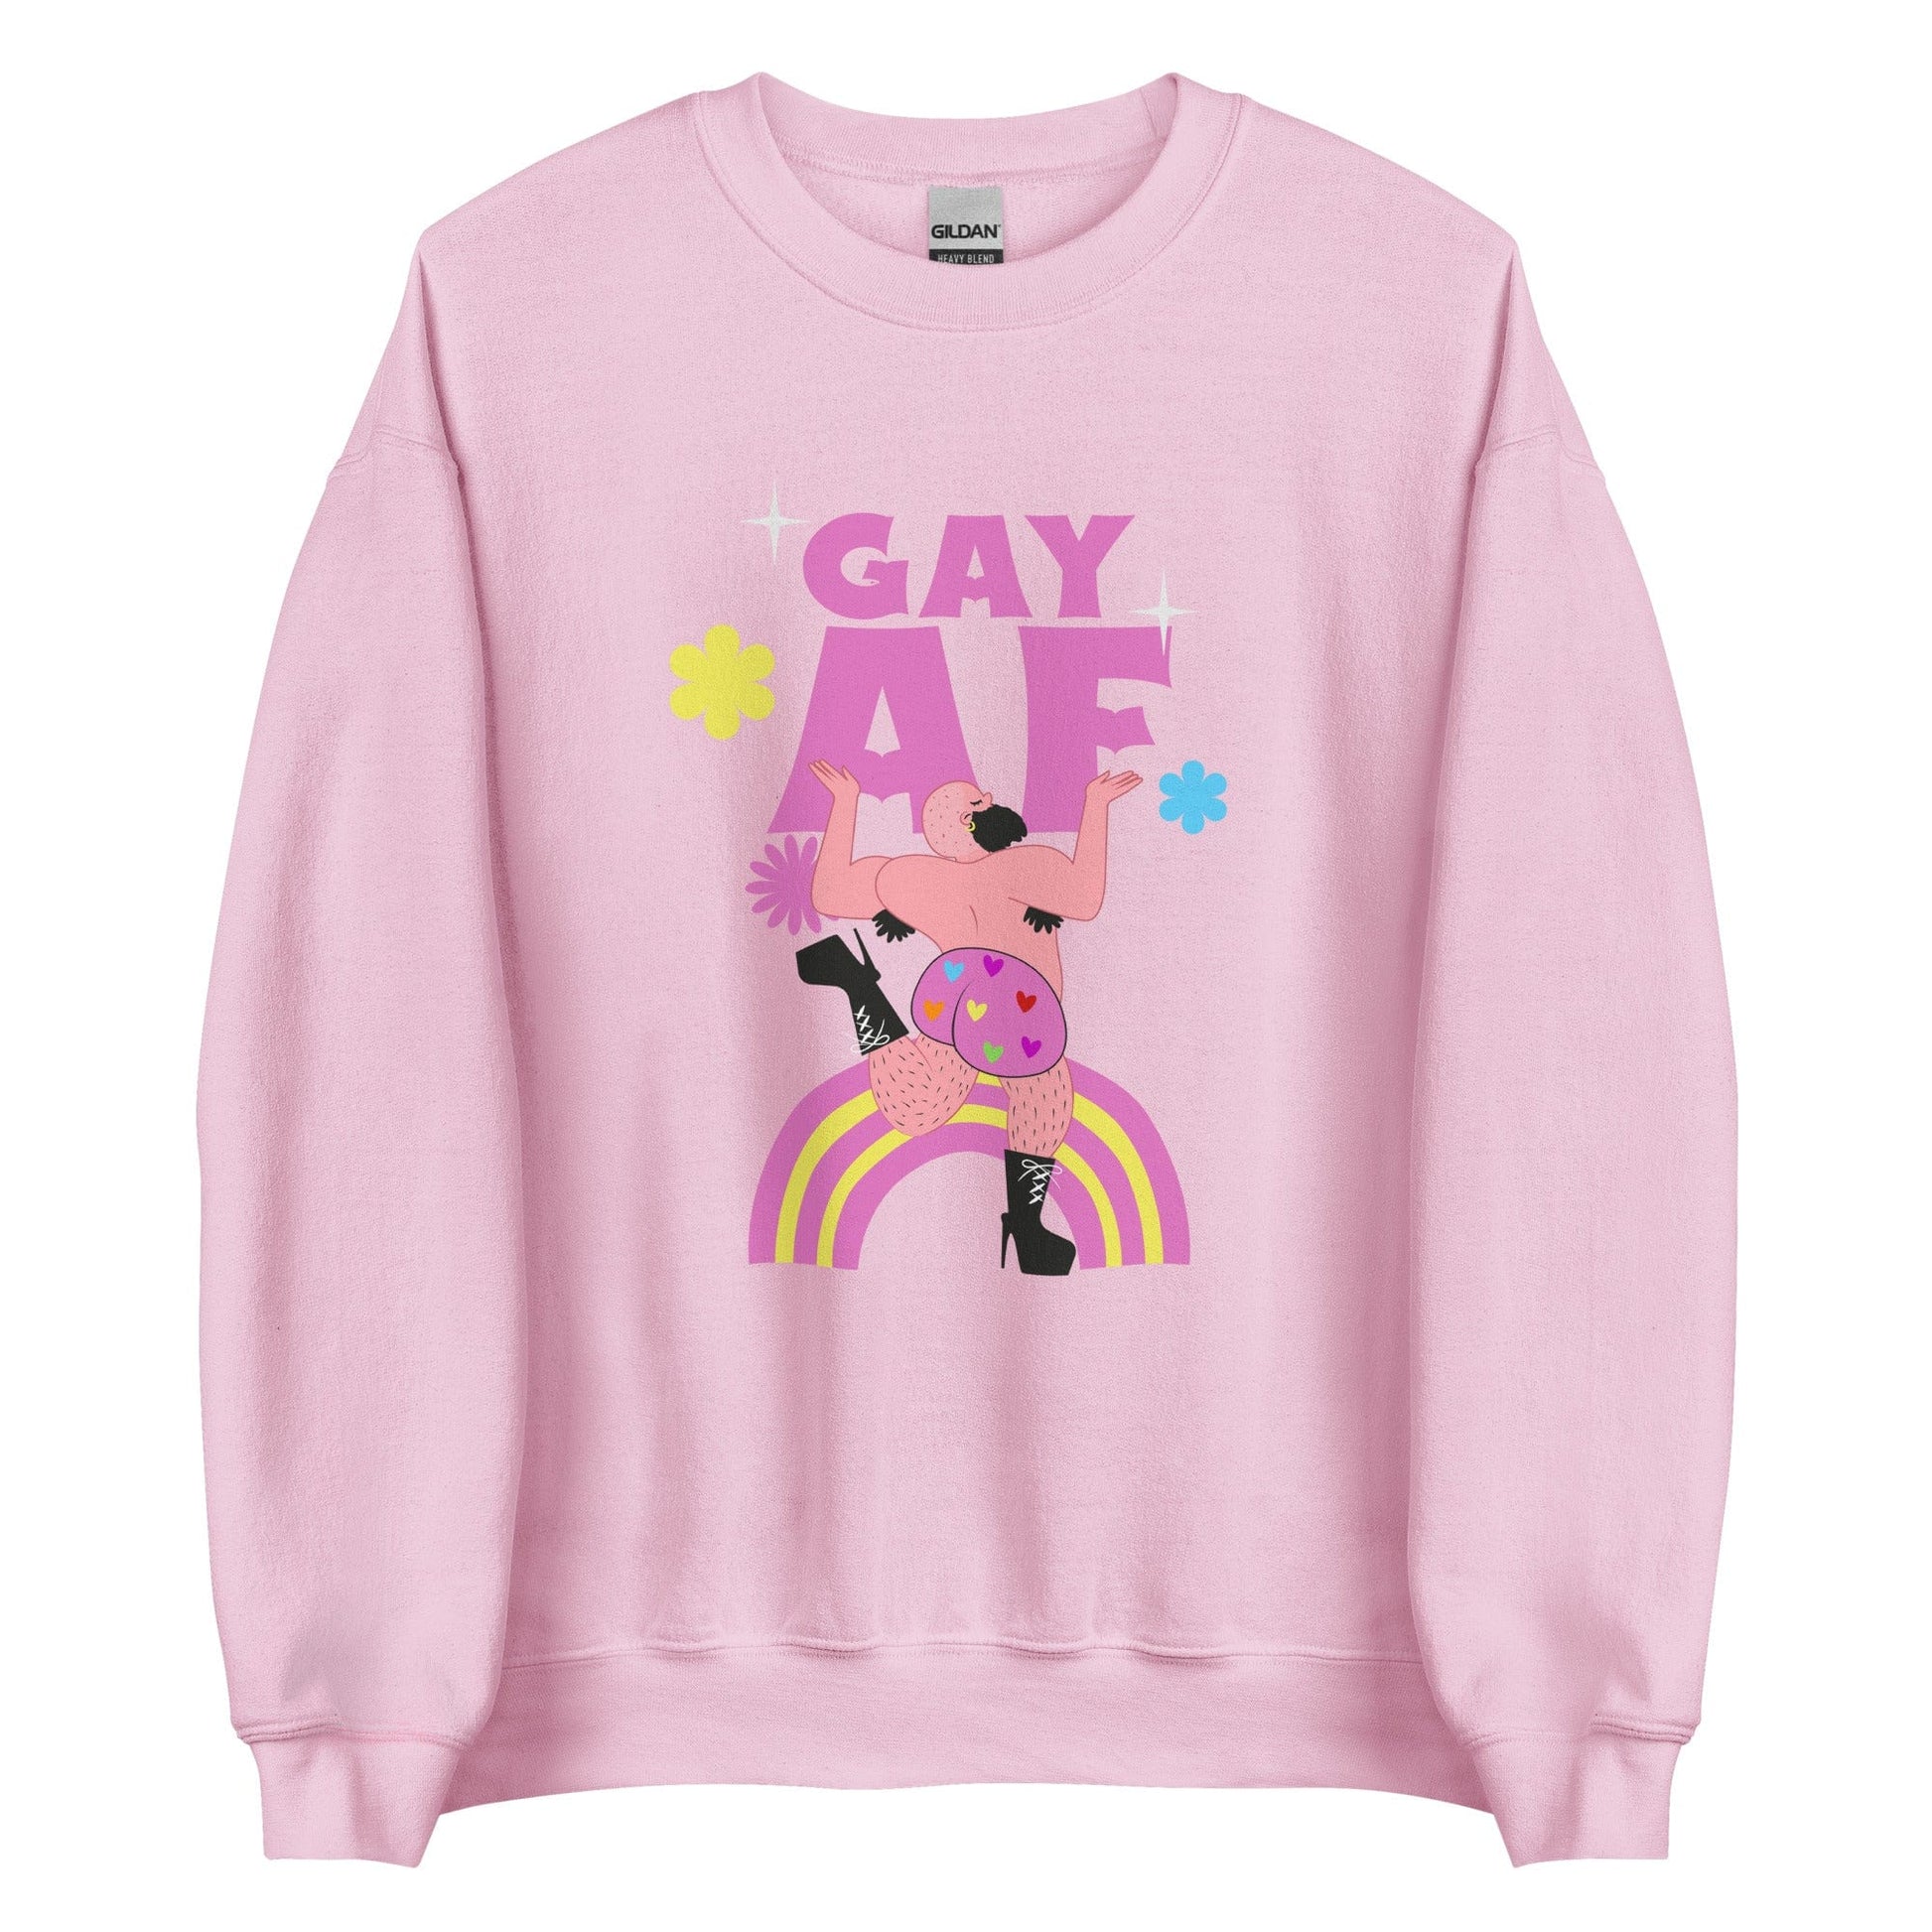 queer-gay-af-light-pink-sweatshirt-lgbtq-by-feminist-define